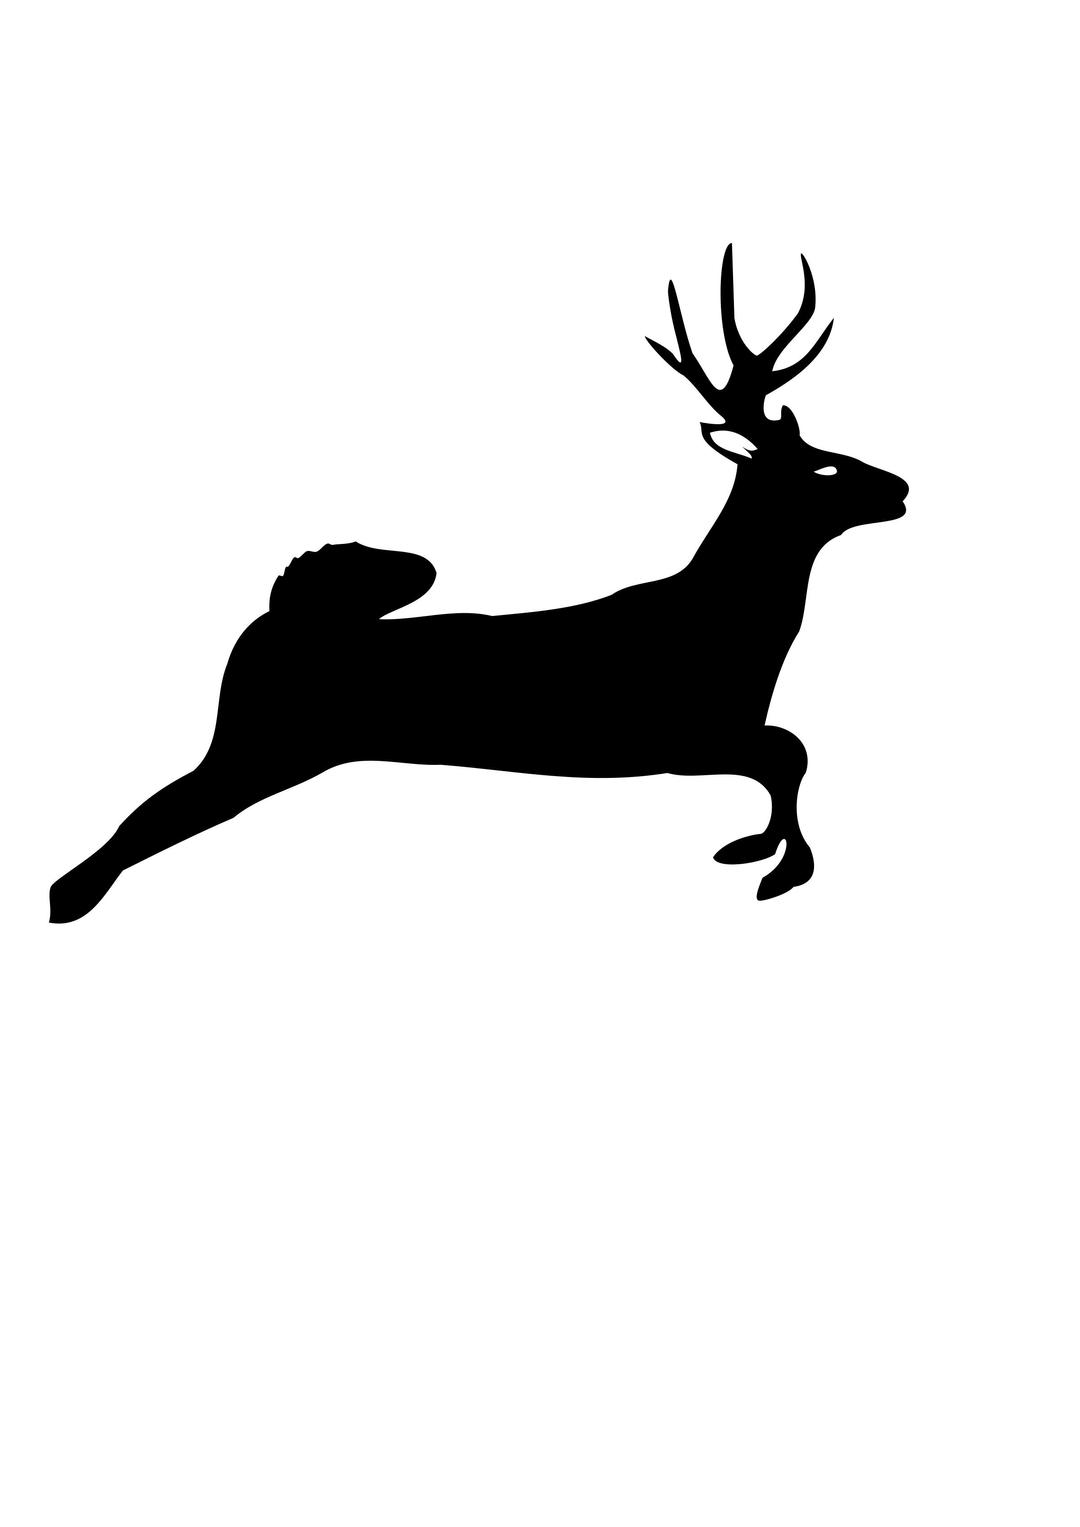 Deer Jumping png transparent